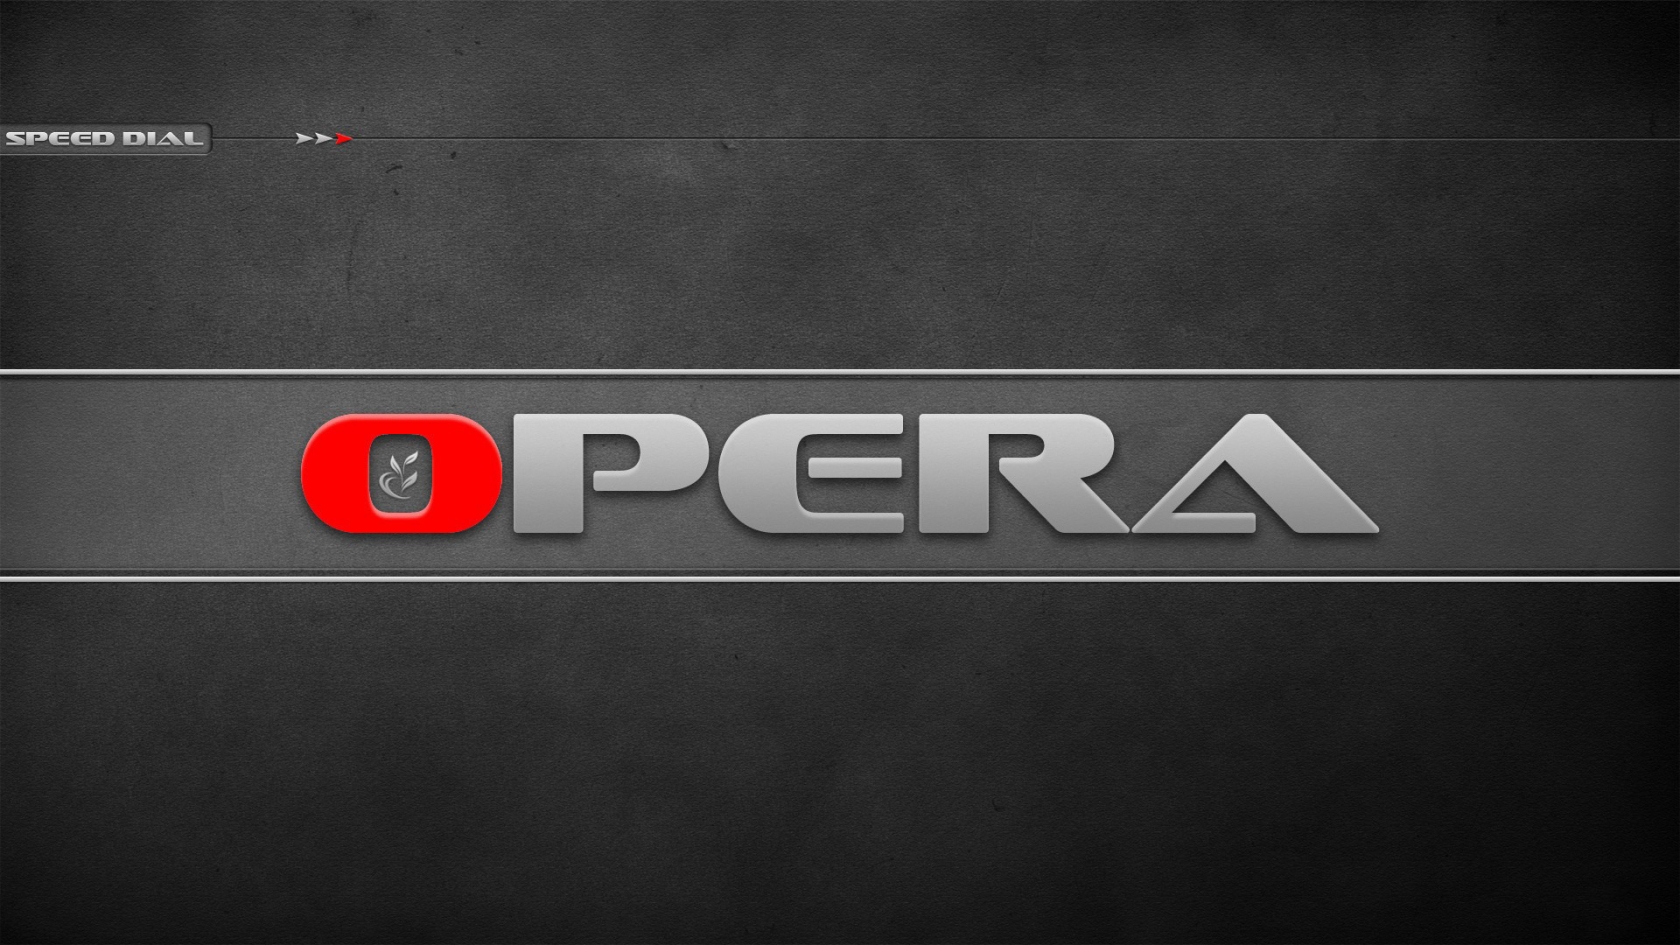 Opera for 1680 x 945 HDTV resolution